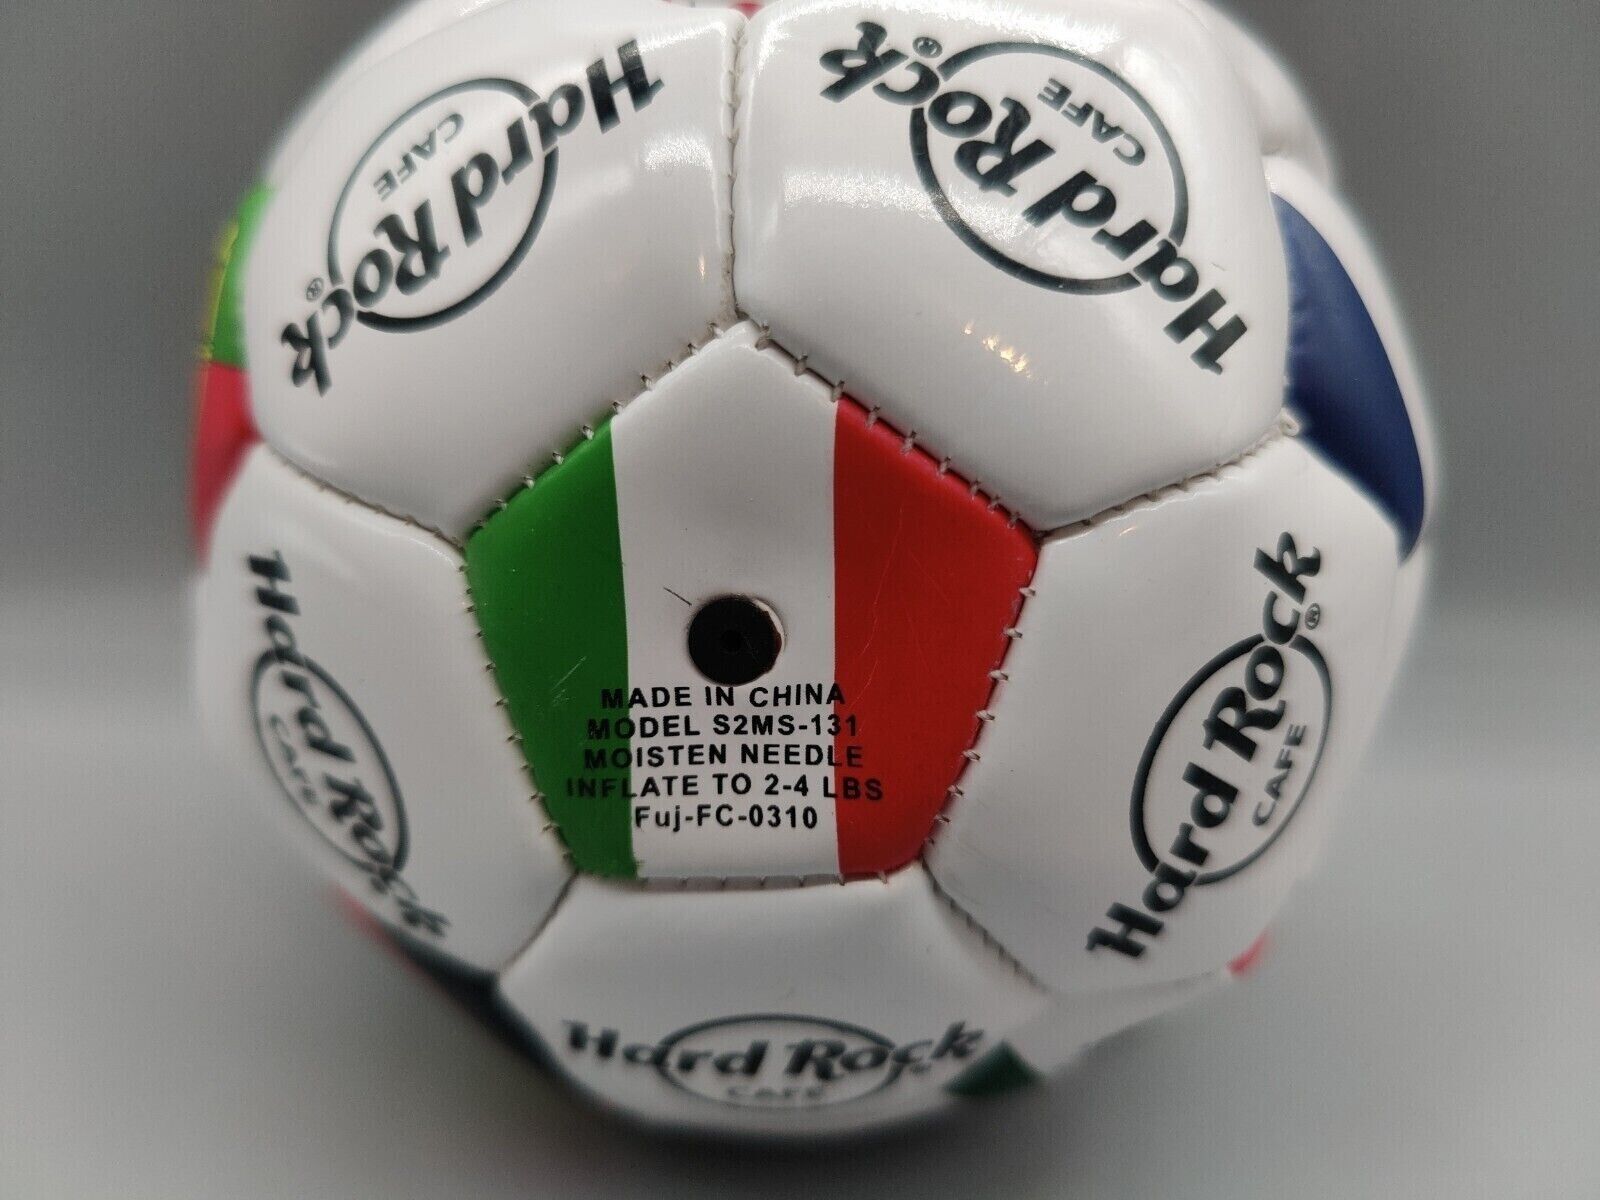 Hard Rock Cafe Promotional Mini Football- World Cup International Rare VGC